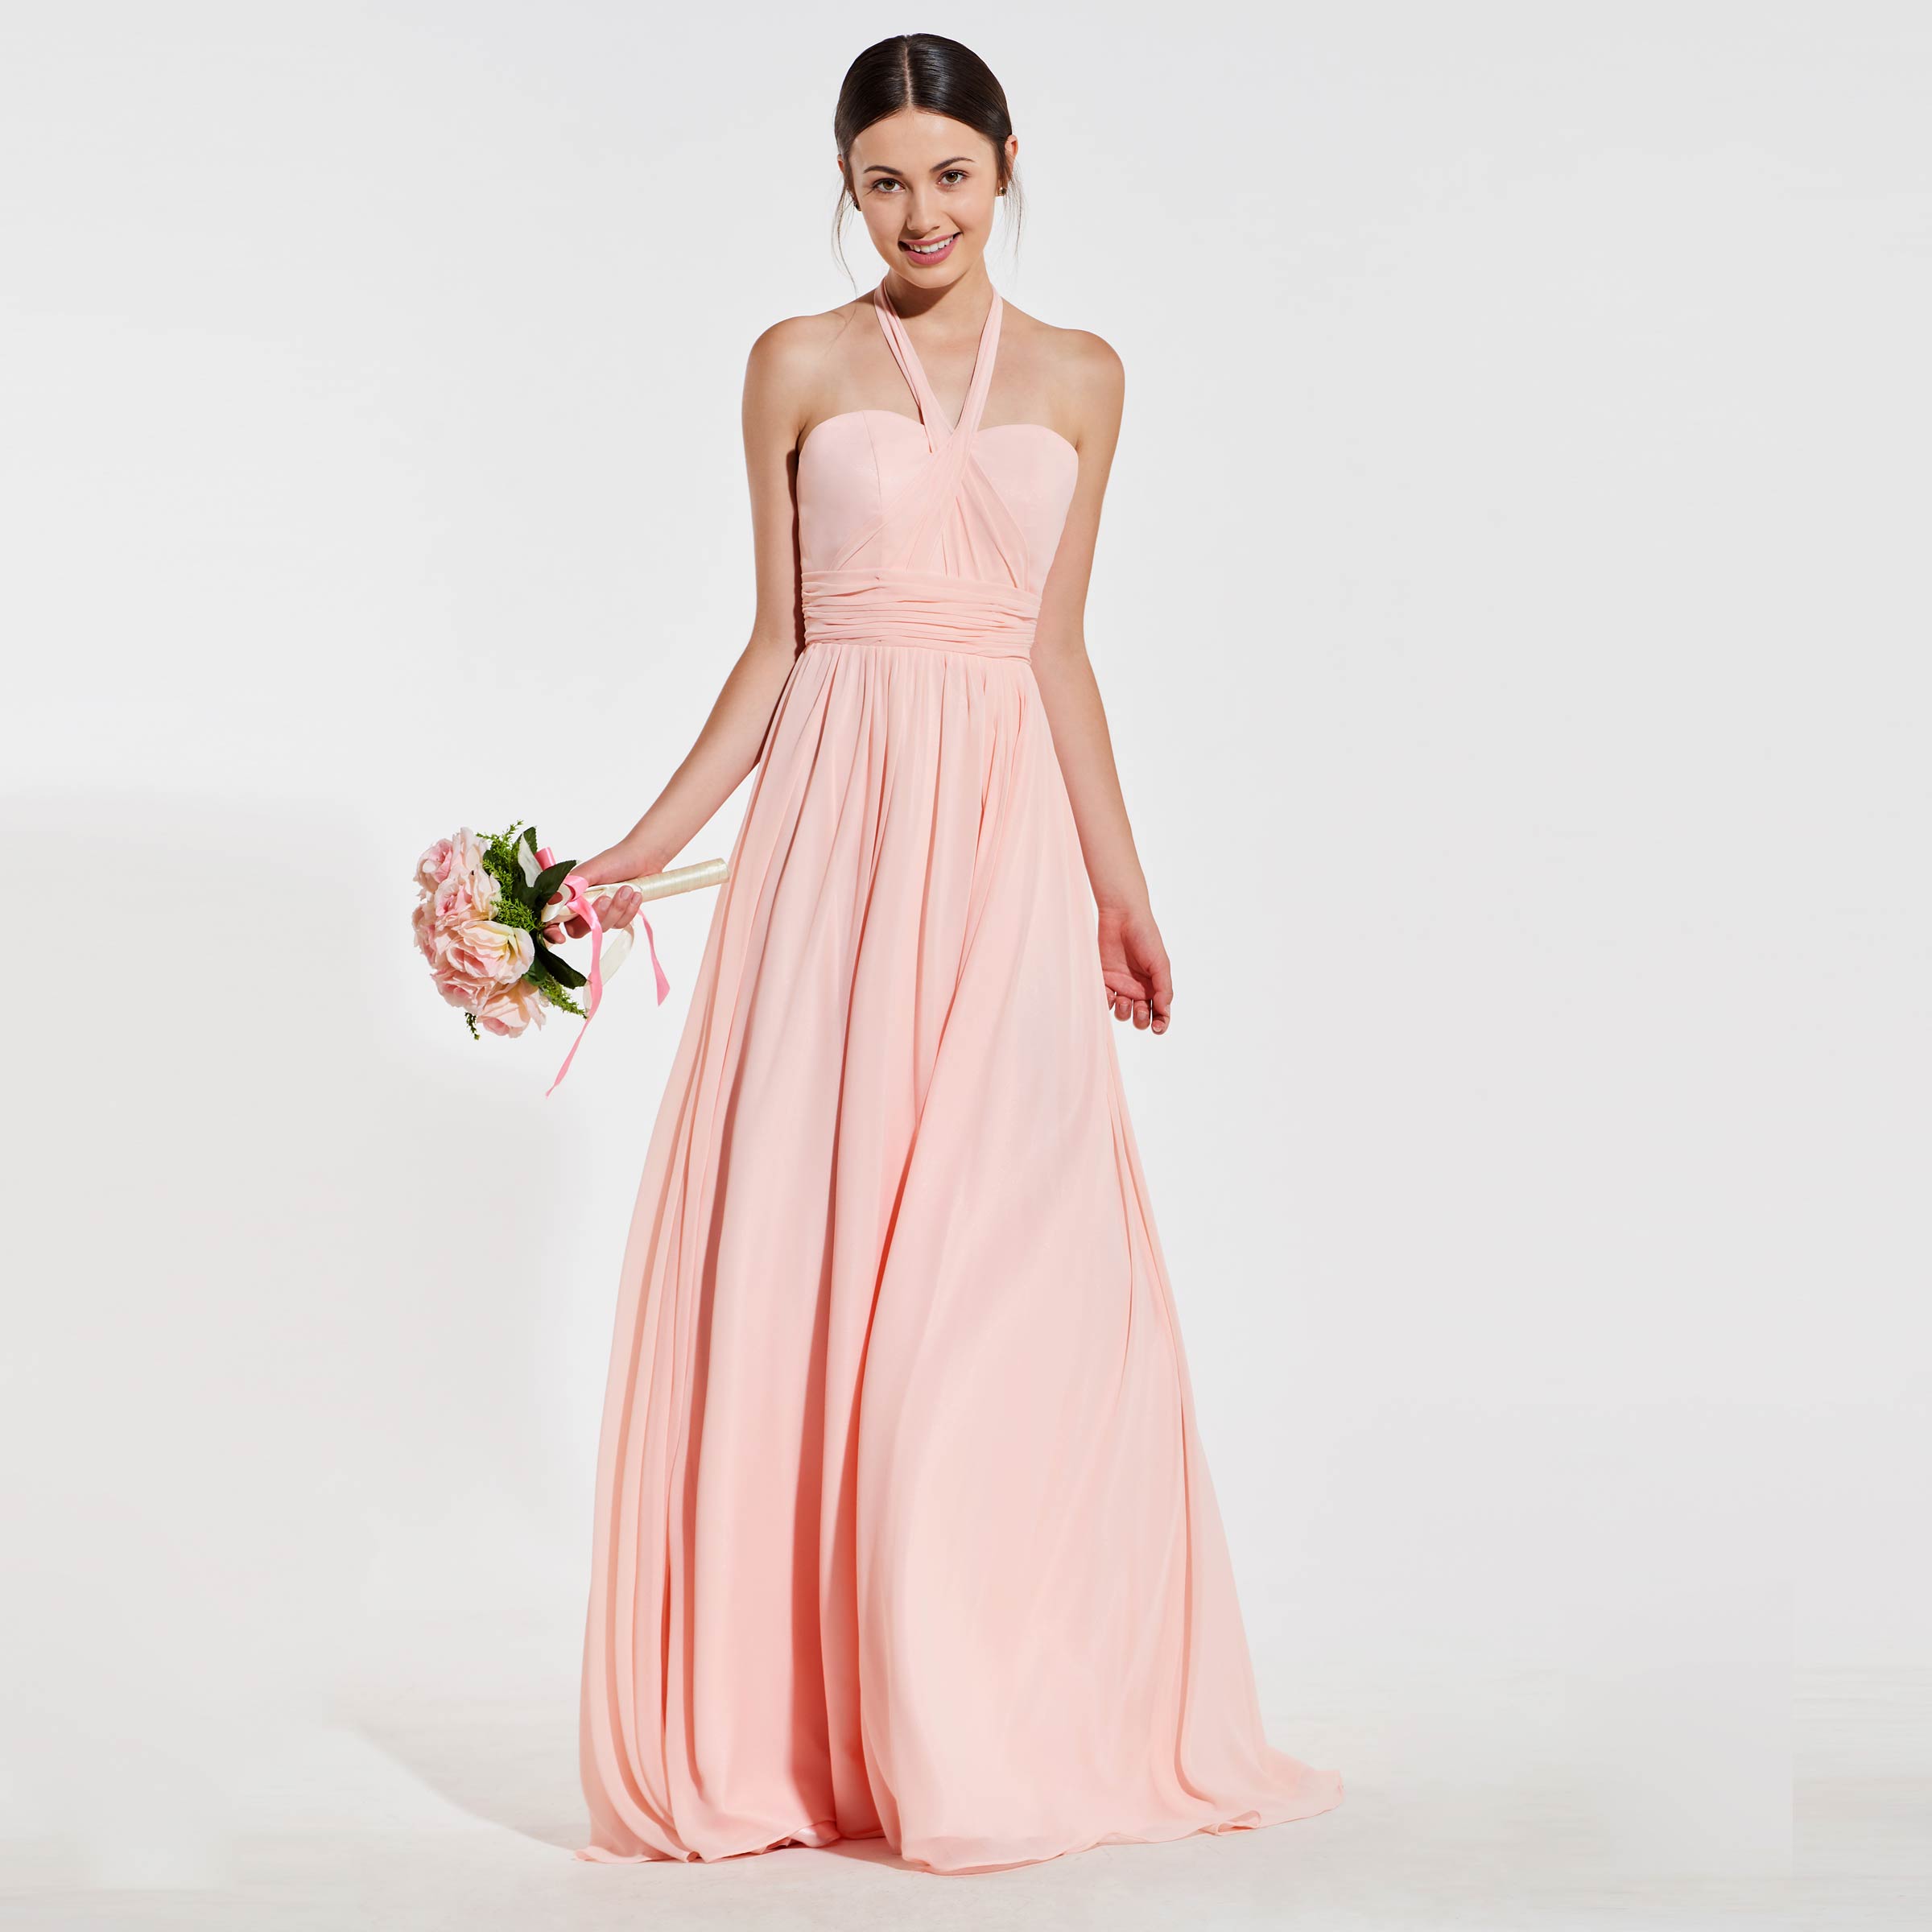 Ericdress Pink Halter Neck Backless A-Line Bridesmaid Dress Rose Quartz Dress